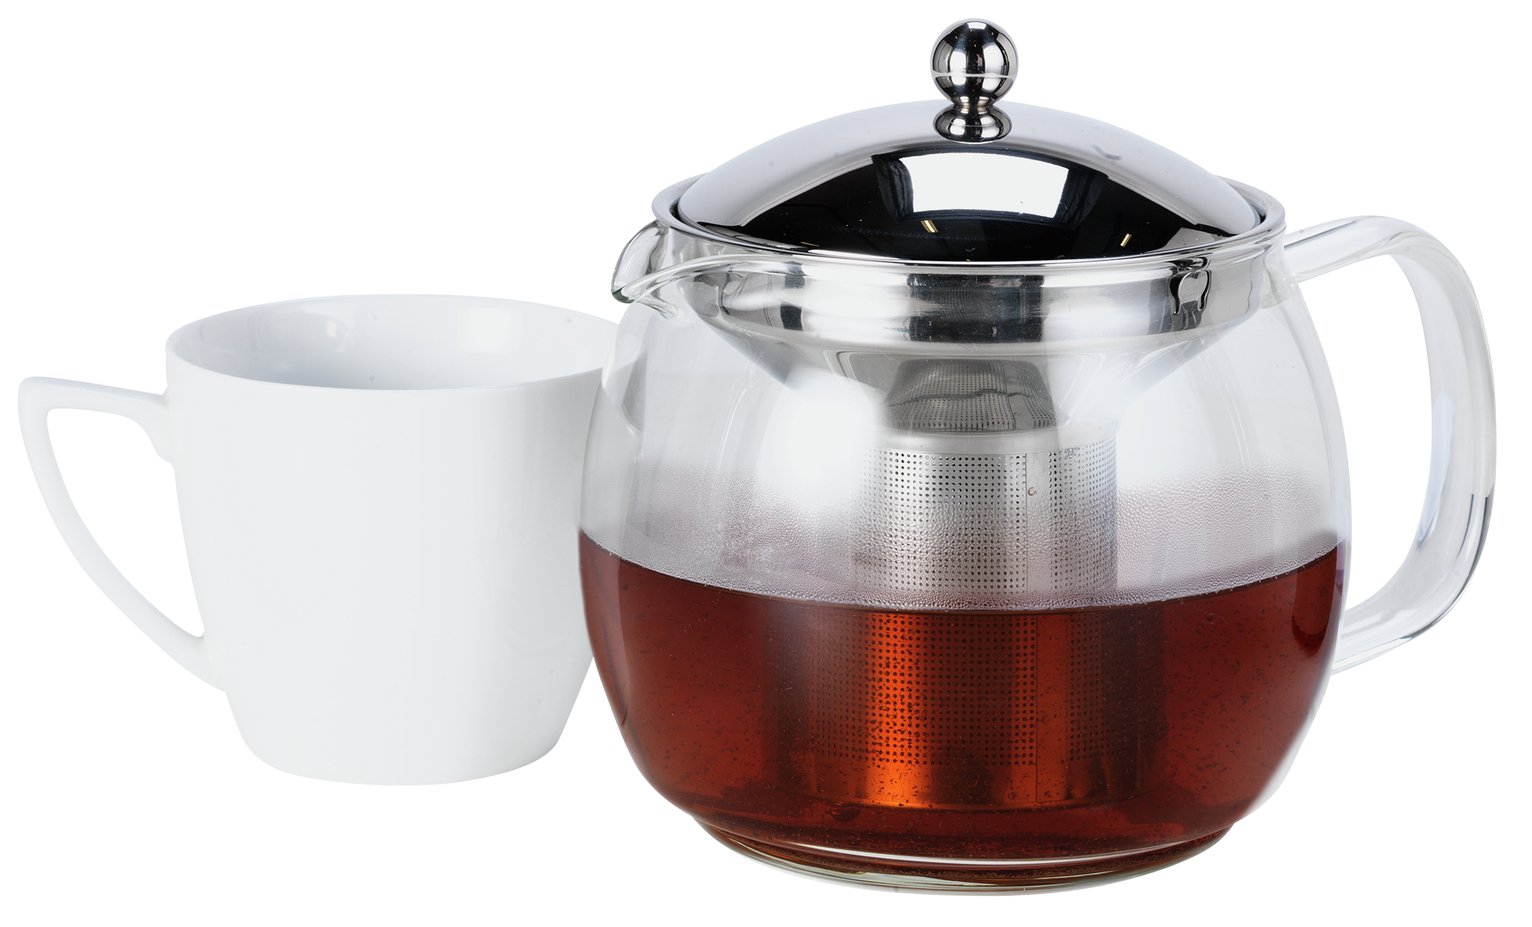 Argos Home Round Glass Teapot Review